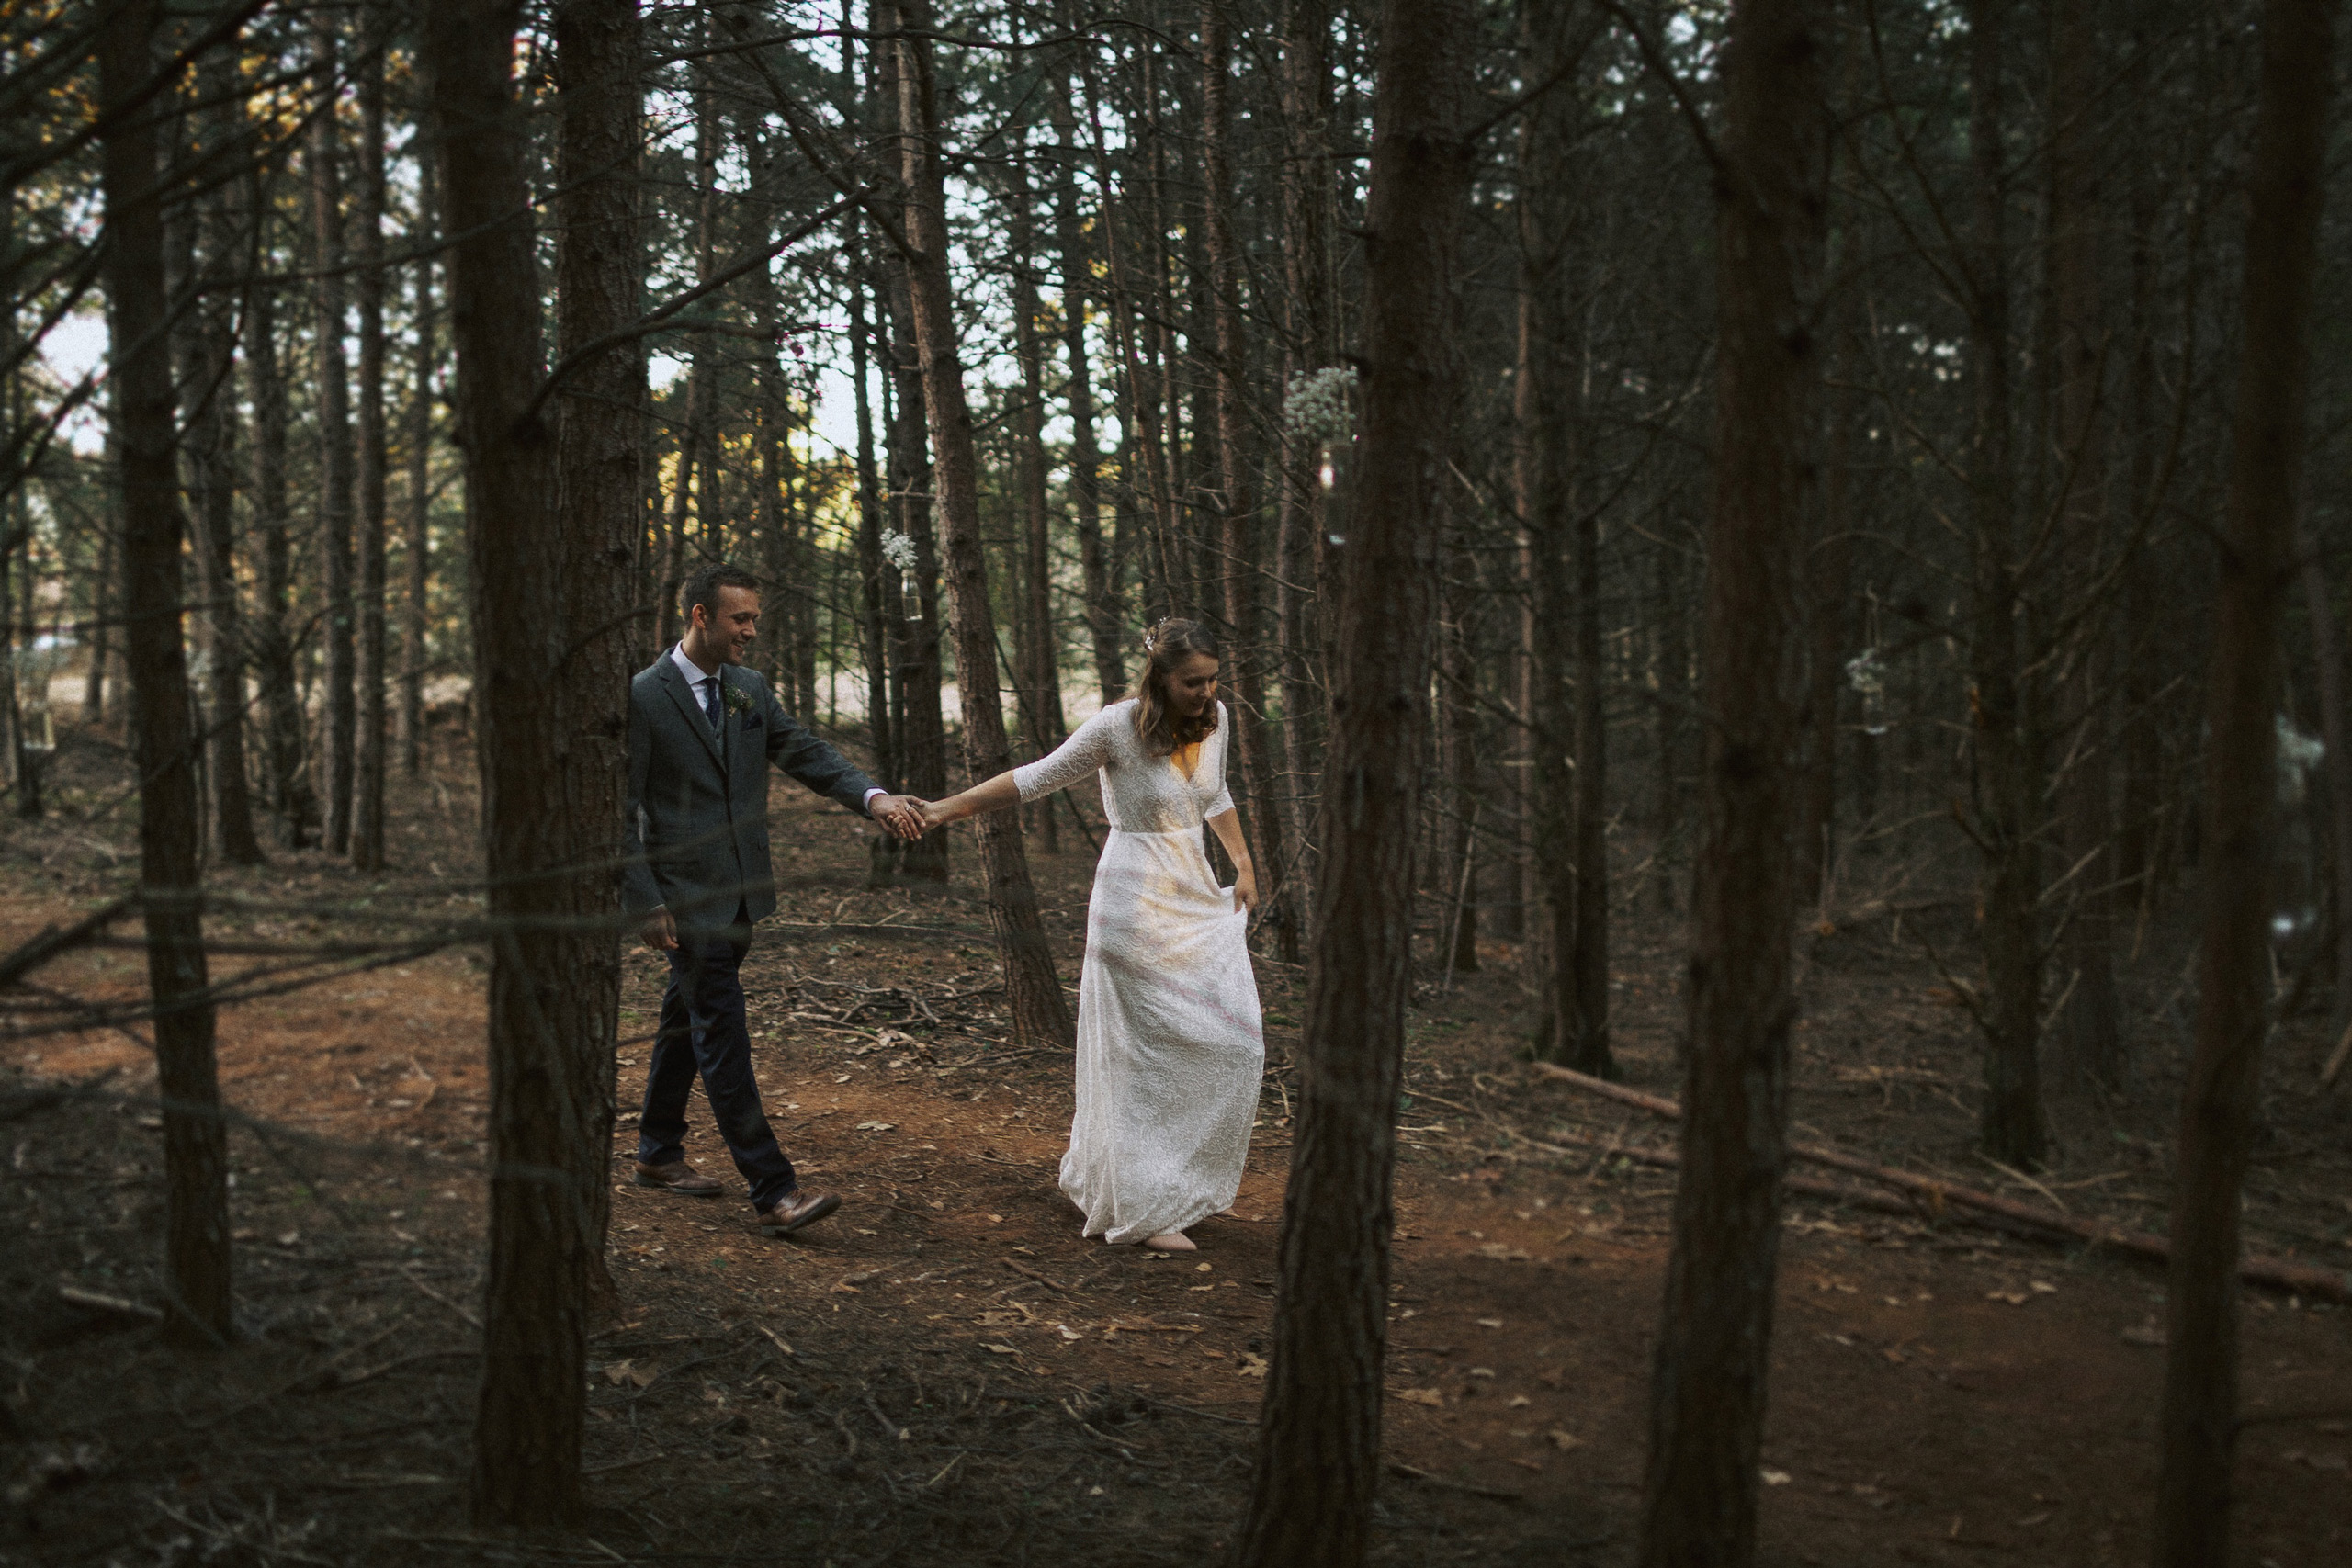 wedding couple walking through Virginia woodland forest at dusk - captured by Virginia documentary wedding photographer - fujifilm classic wedding photo